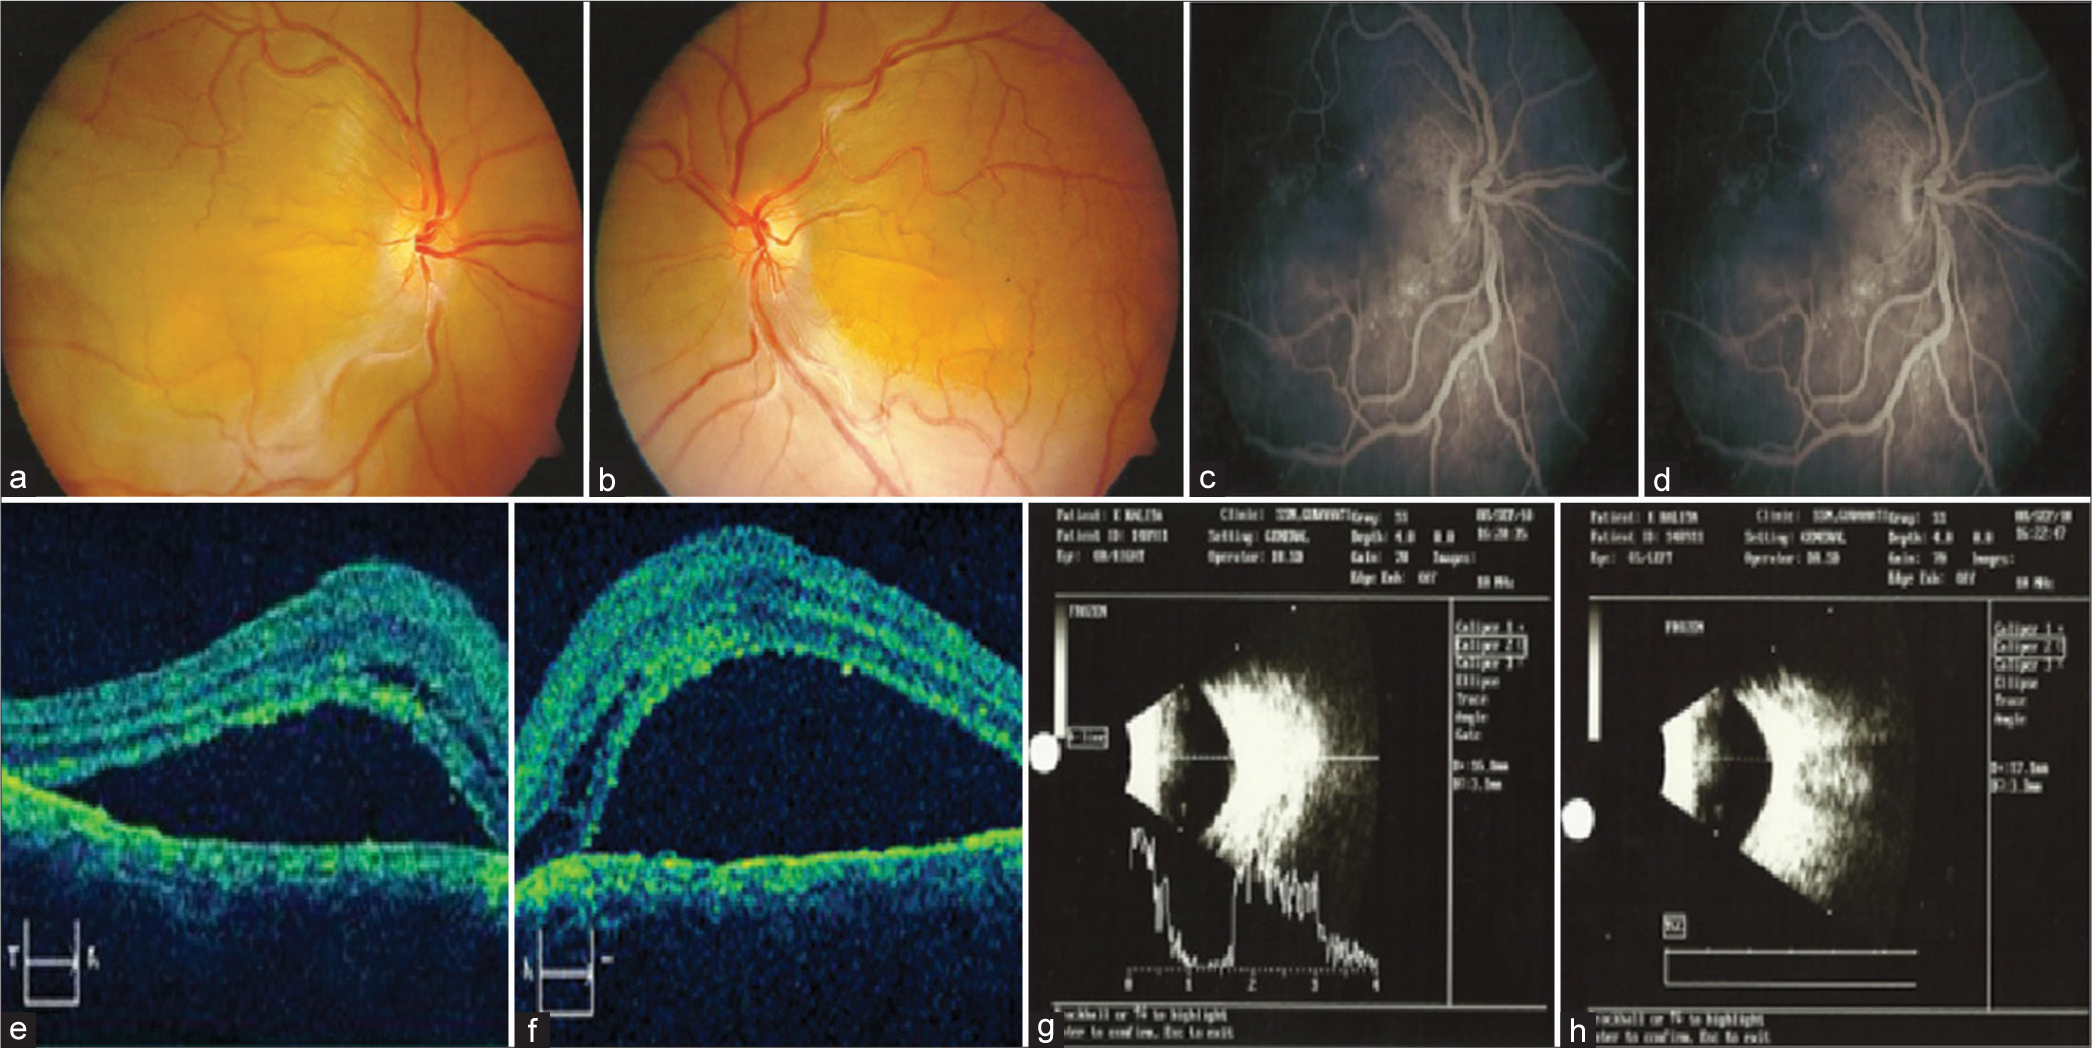 (a) Pre-treatment fundus photo right eye, (b) pre-treatment fundus photo left eye, (c) pre-treatment fundus fluorescein angiography (FFA) right eye, (d) pre-treatment FFA left eye, (e) pre-treatment optical coherence tomography (OCT) right eye, (f) pre-treatment OCT left eye, (g) pre-treatment ultrasonography (USG) B-Scan right eye, and (h) pre-treatment USG B-Scan left eye. Bright Scan (B-Scan).